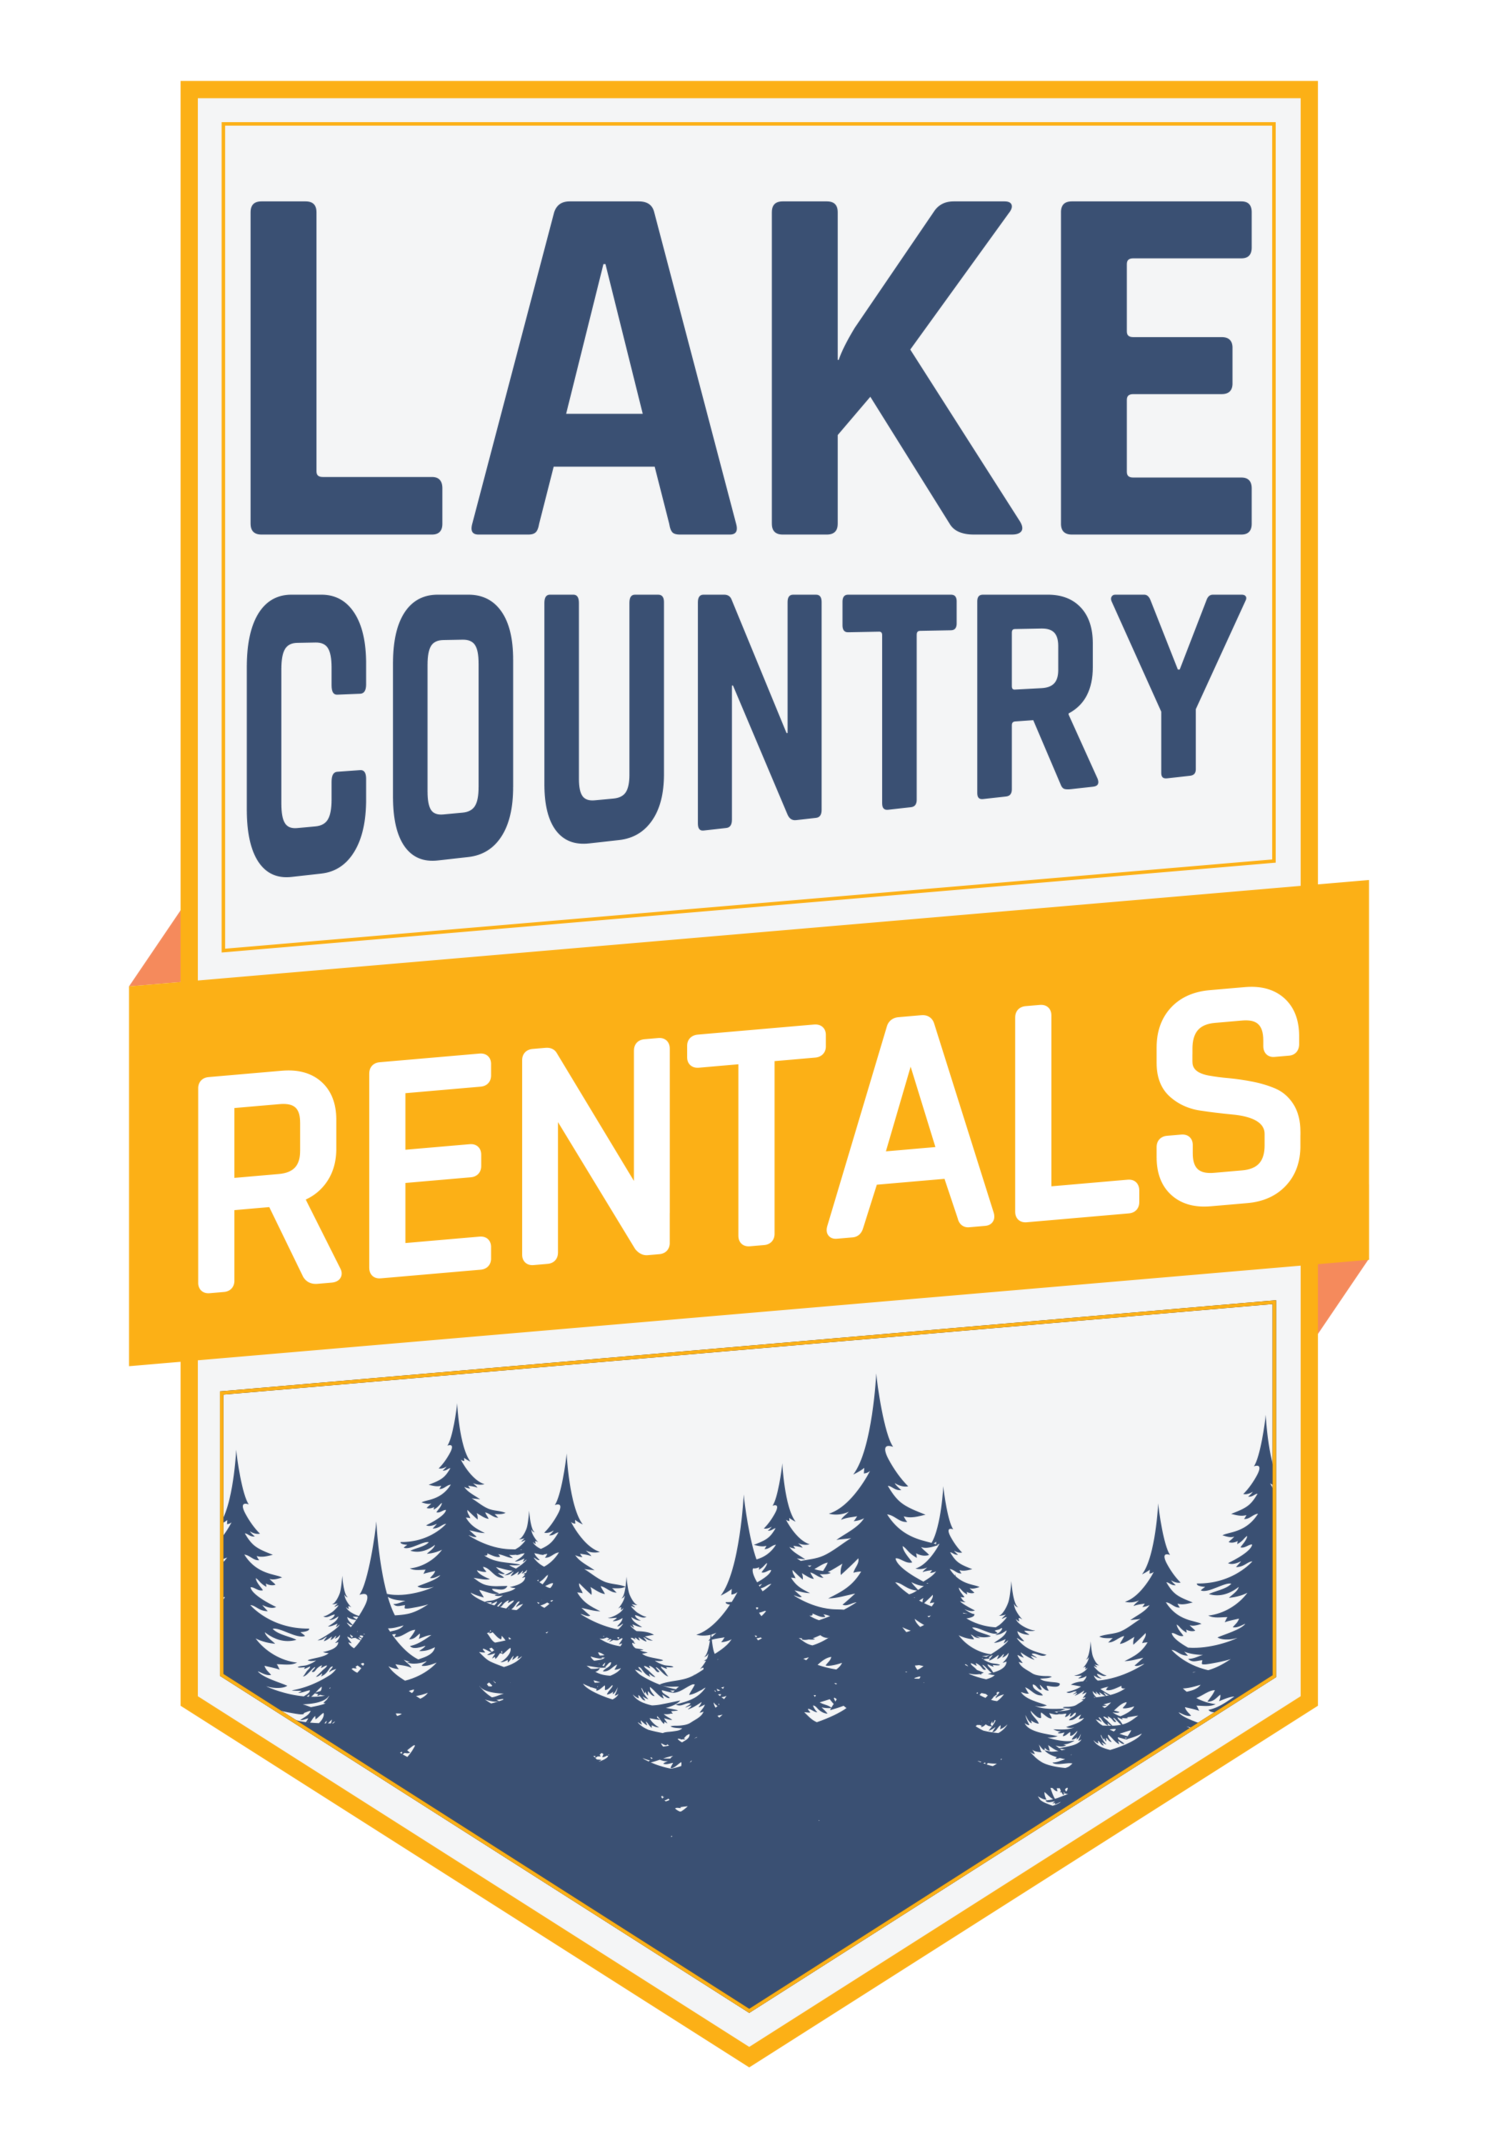 Lake Country Rentals